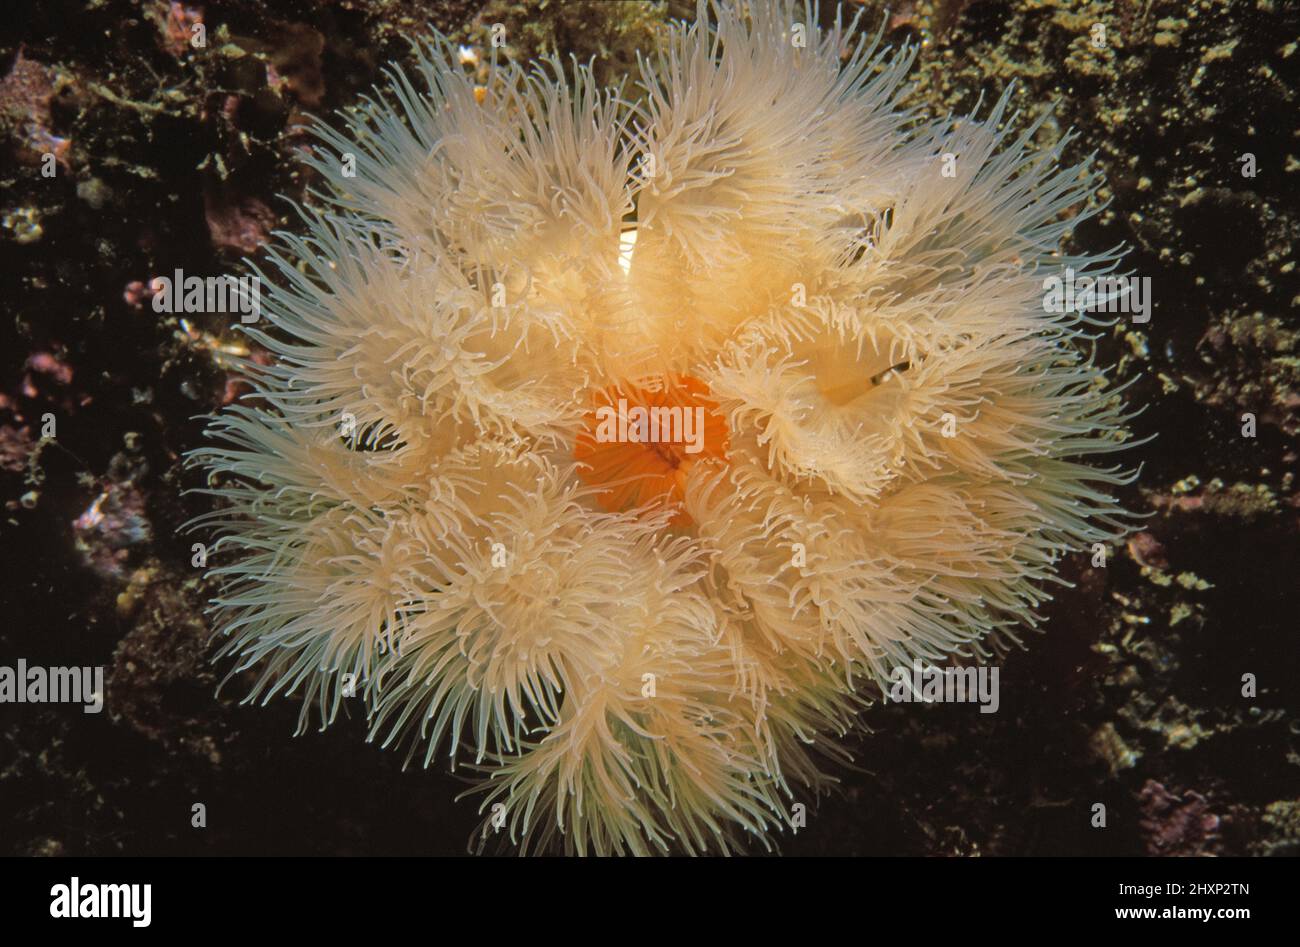 Plumose anemone (Metridium dianthus) head tentacles and mouth, UK. Stock Photo